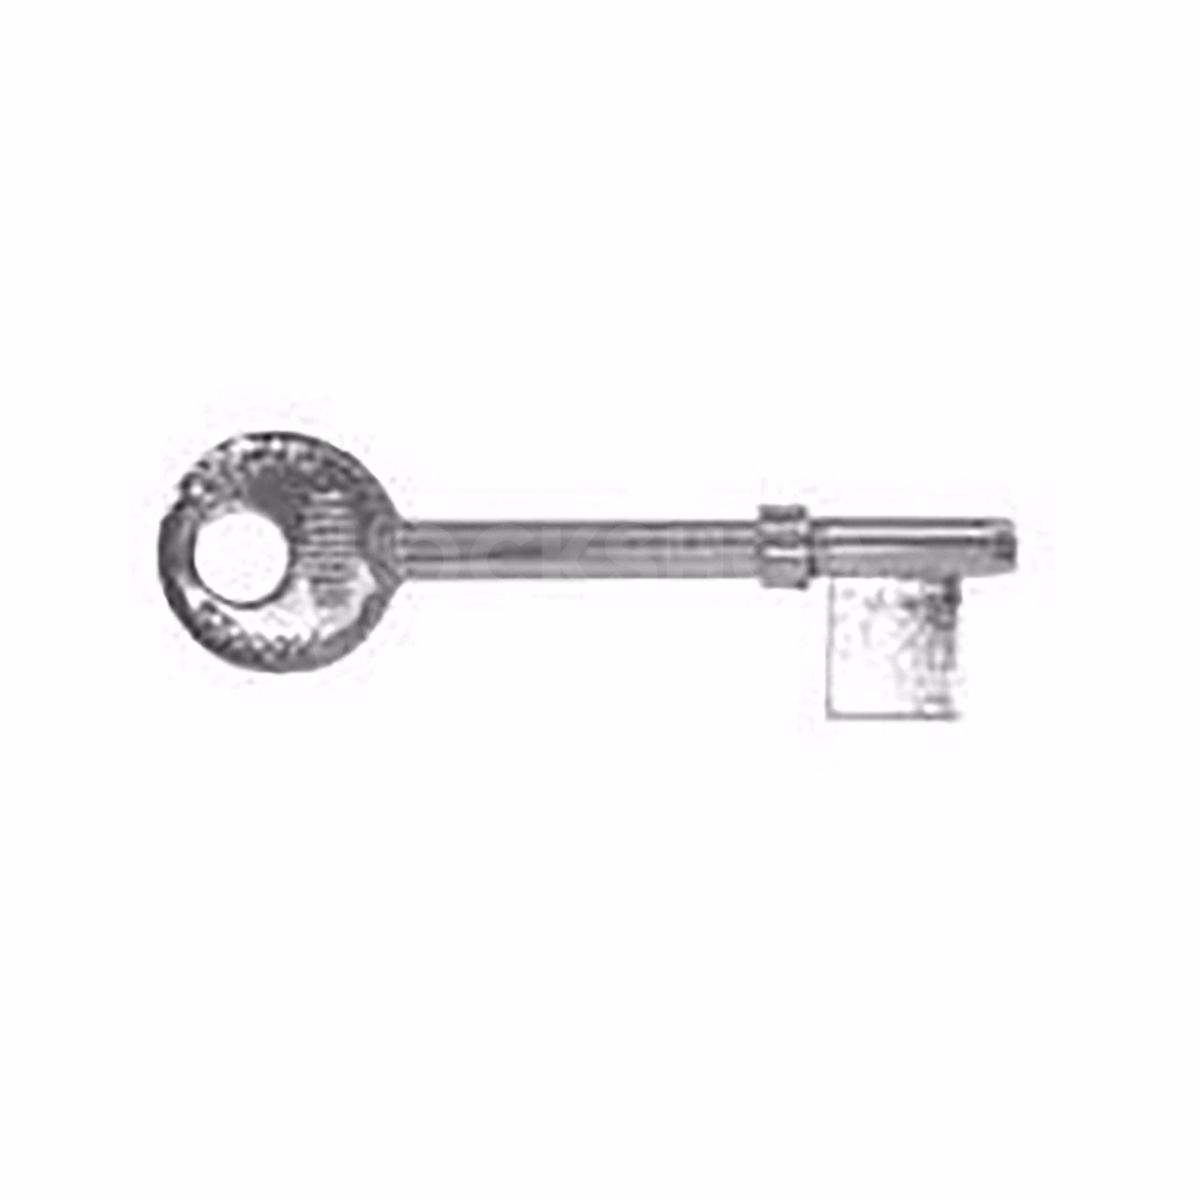 Spare key for Union 2295 locks